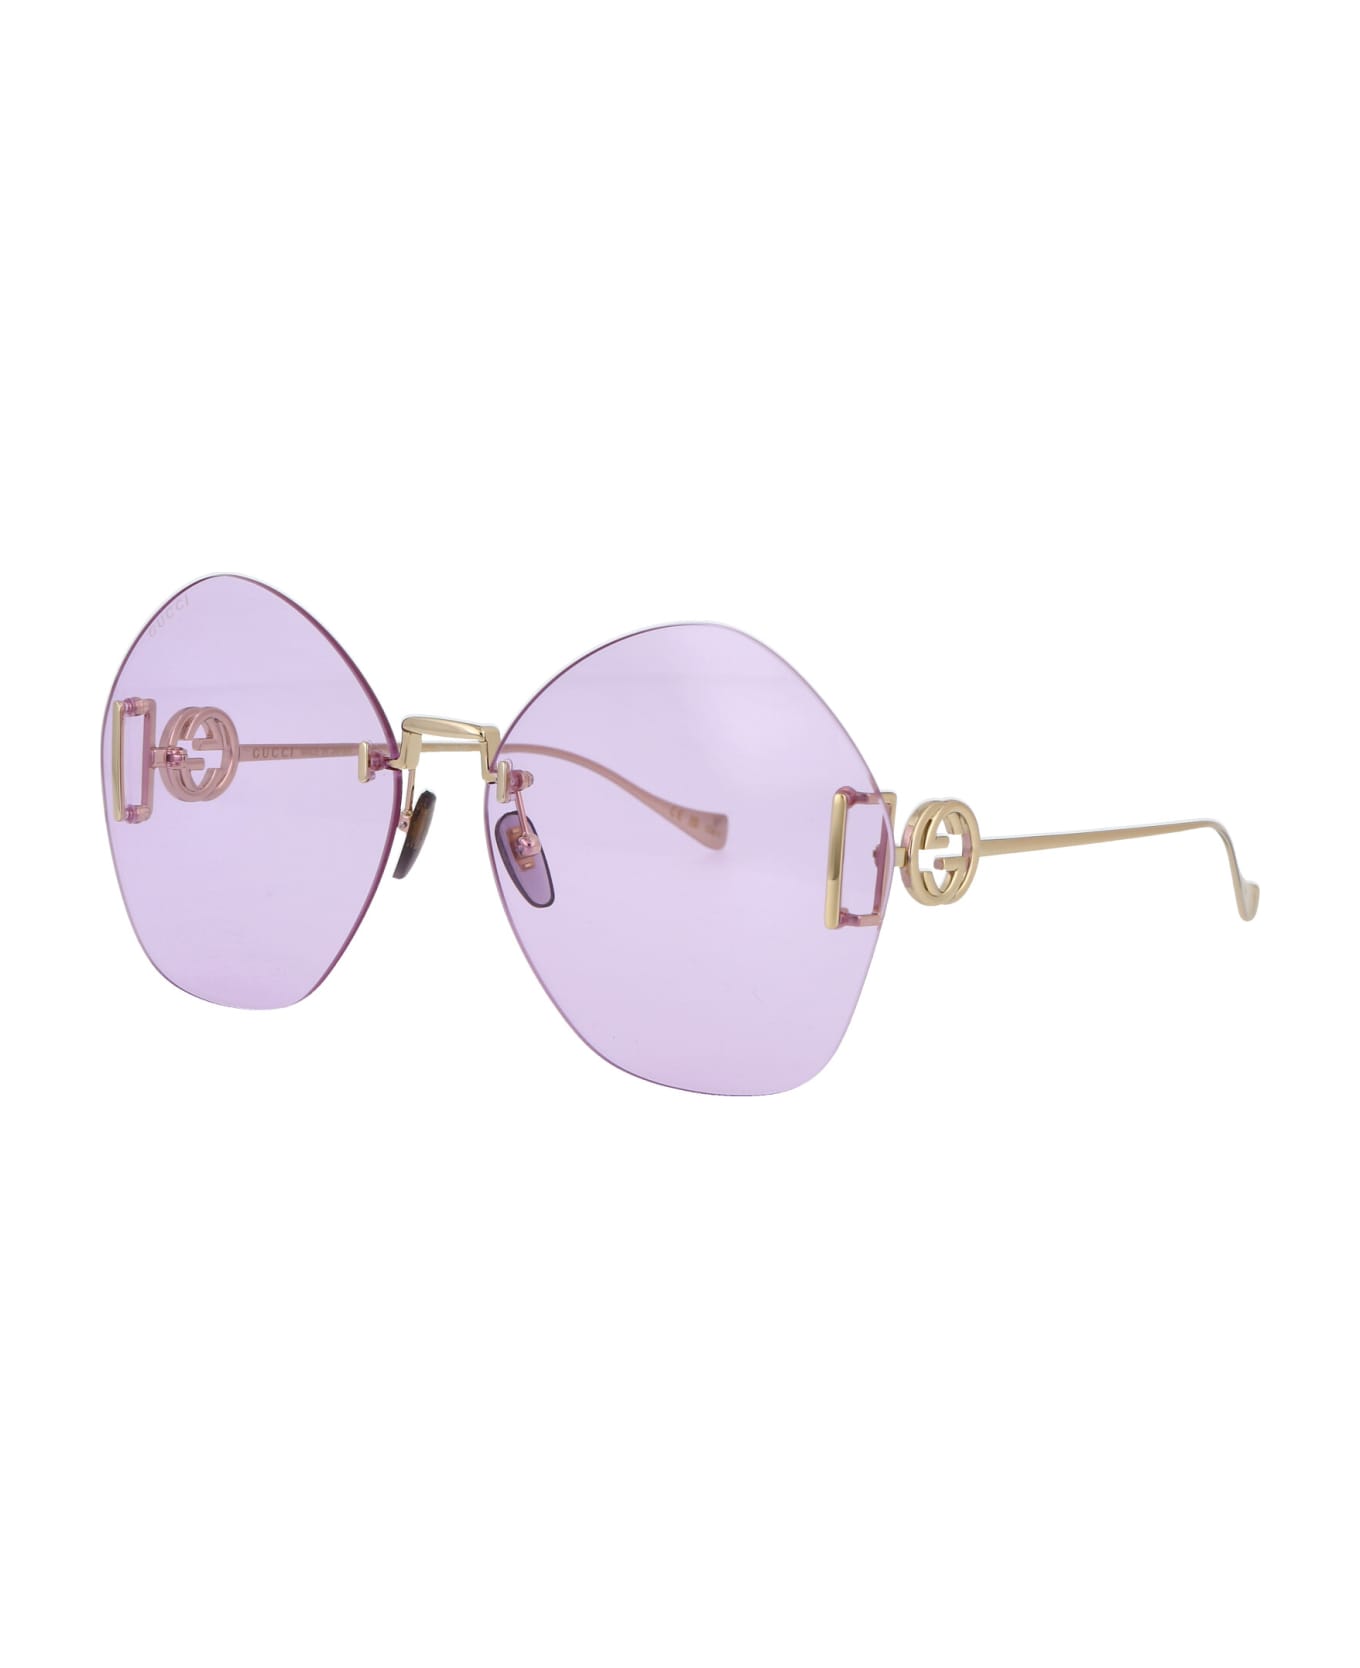 Gucci Eyewear Gg1203s Sunglasses - 001 GOLD GOLD VIOLET サングラス